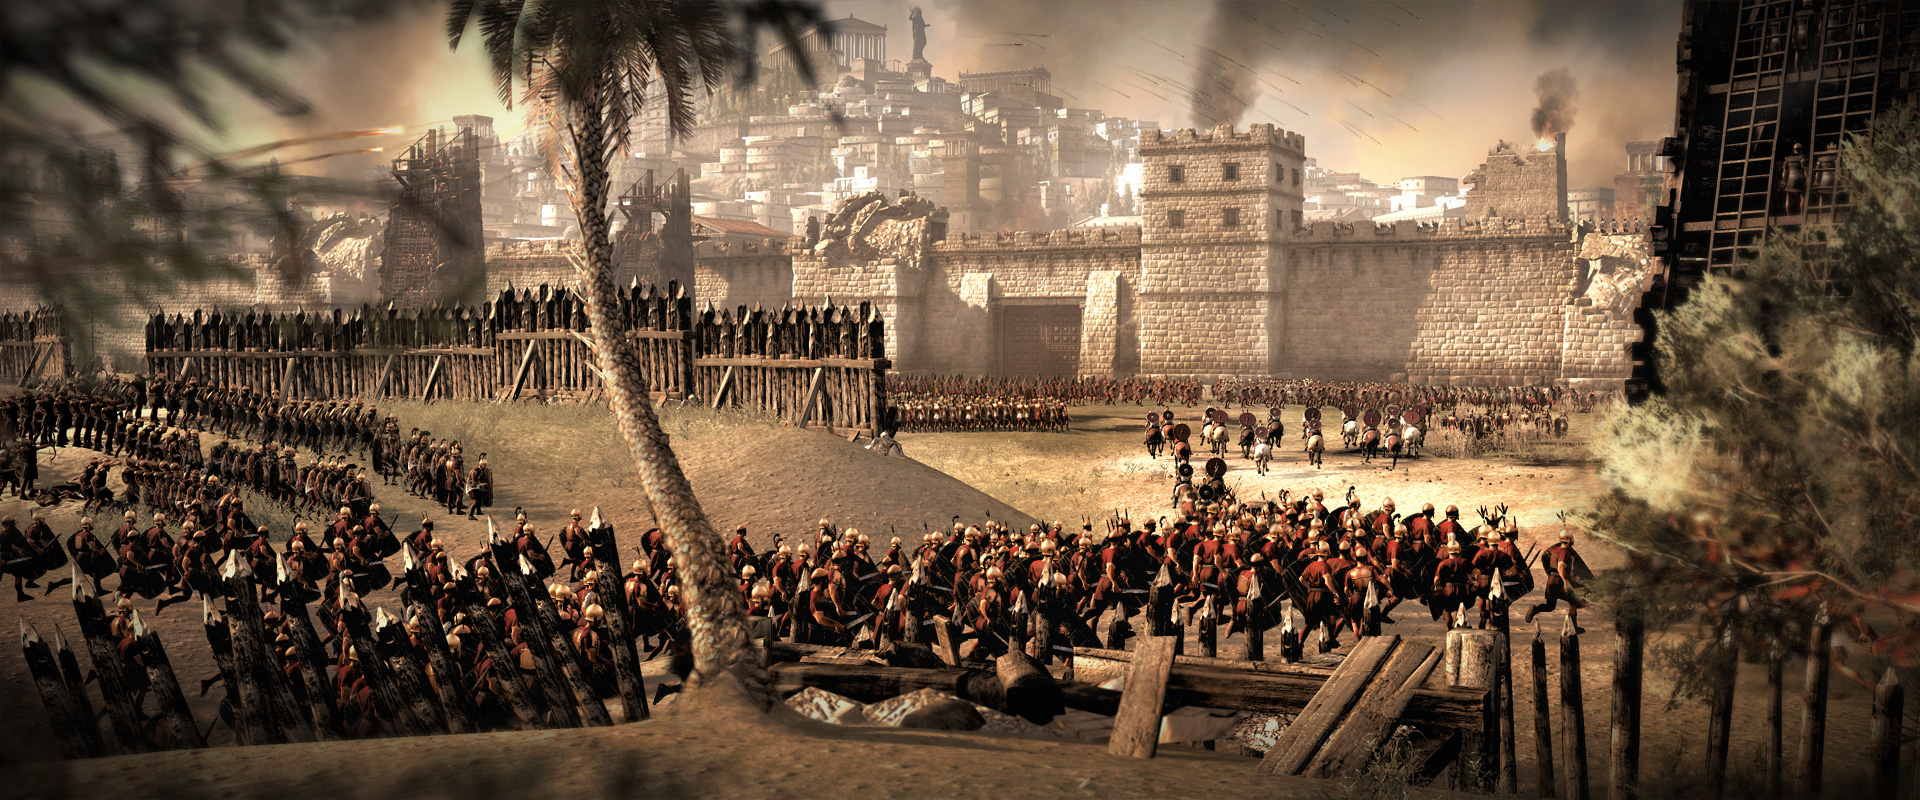 Total War Rome 2 Screenshot 012